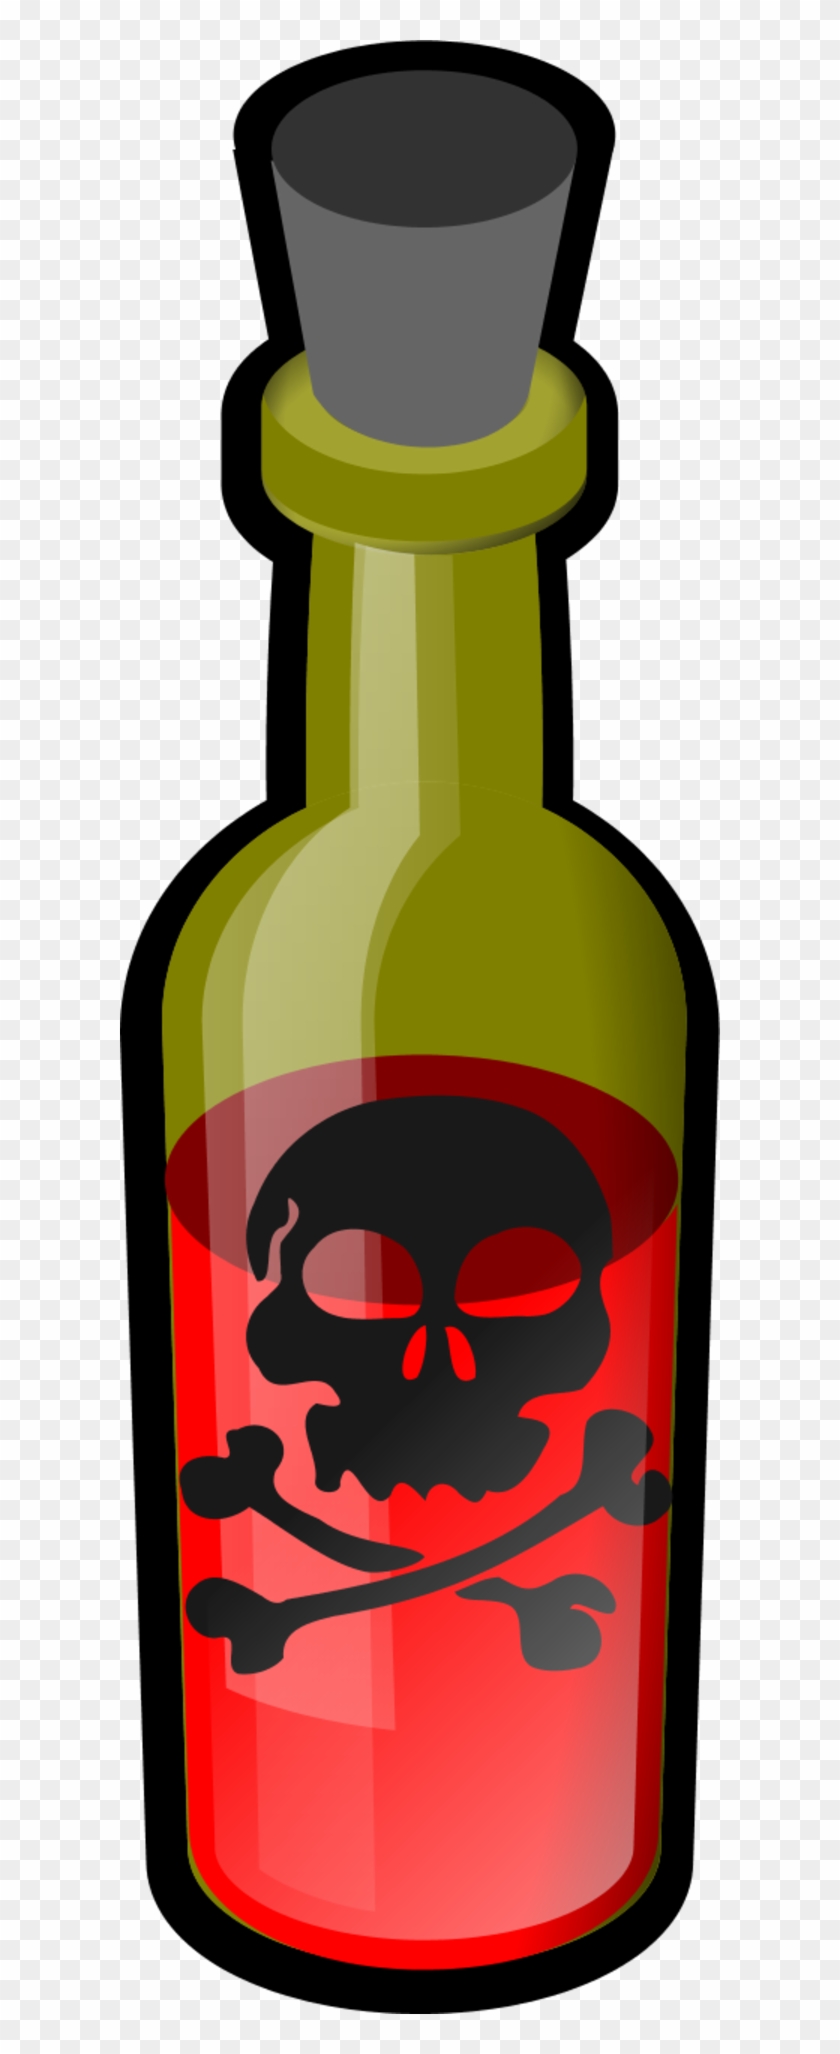 19 That Yeast Is Posionedddd - Cartoon Poison Bottle Clipart #6055294